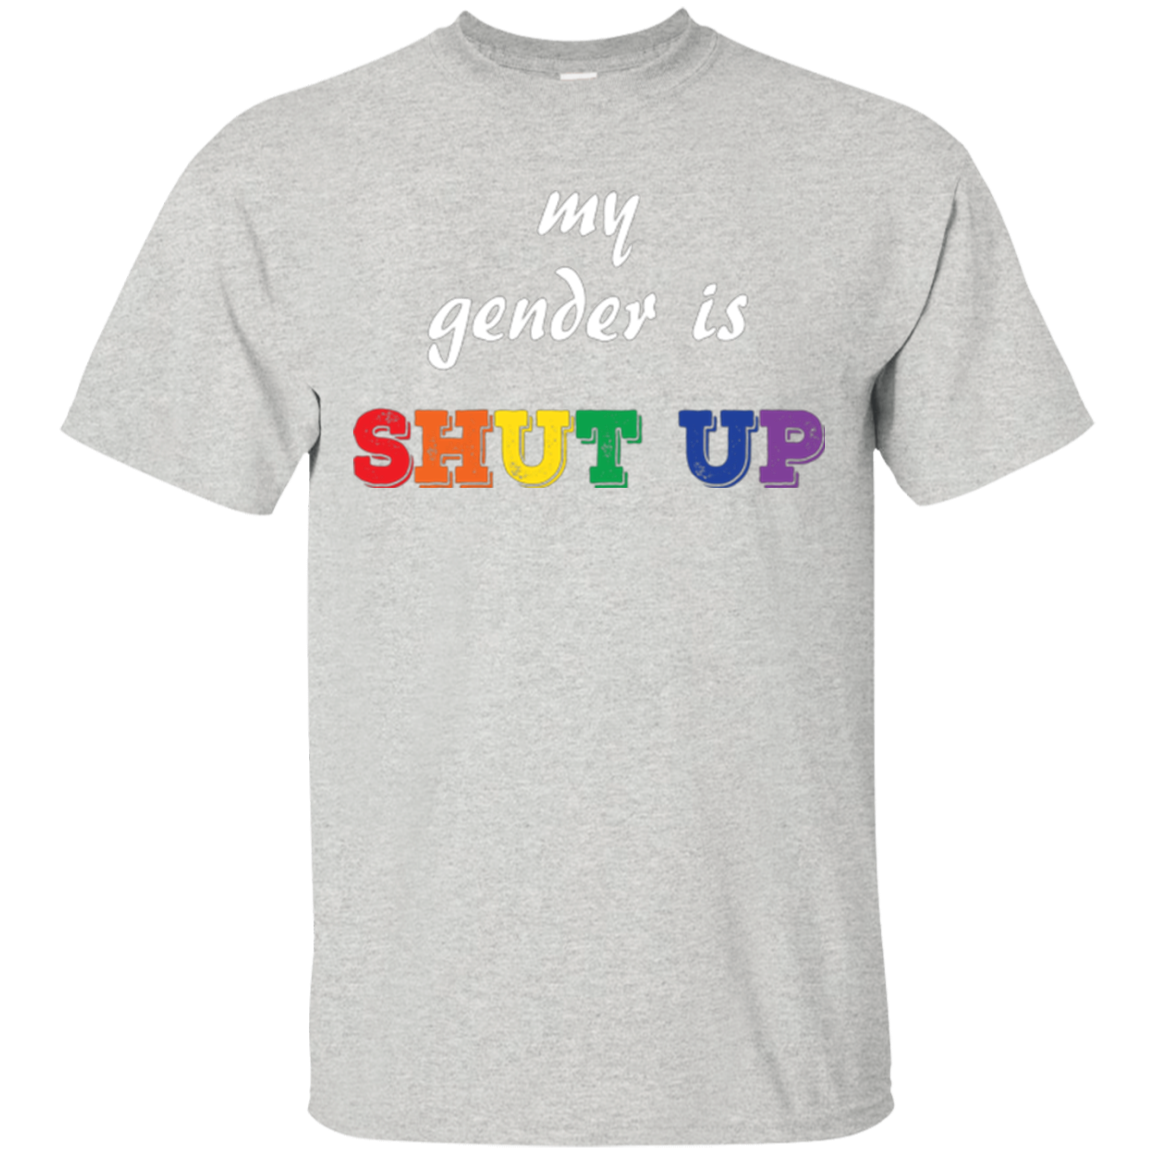 Funny LGBT Shirt - "My Gender is Shut Up"